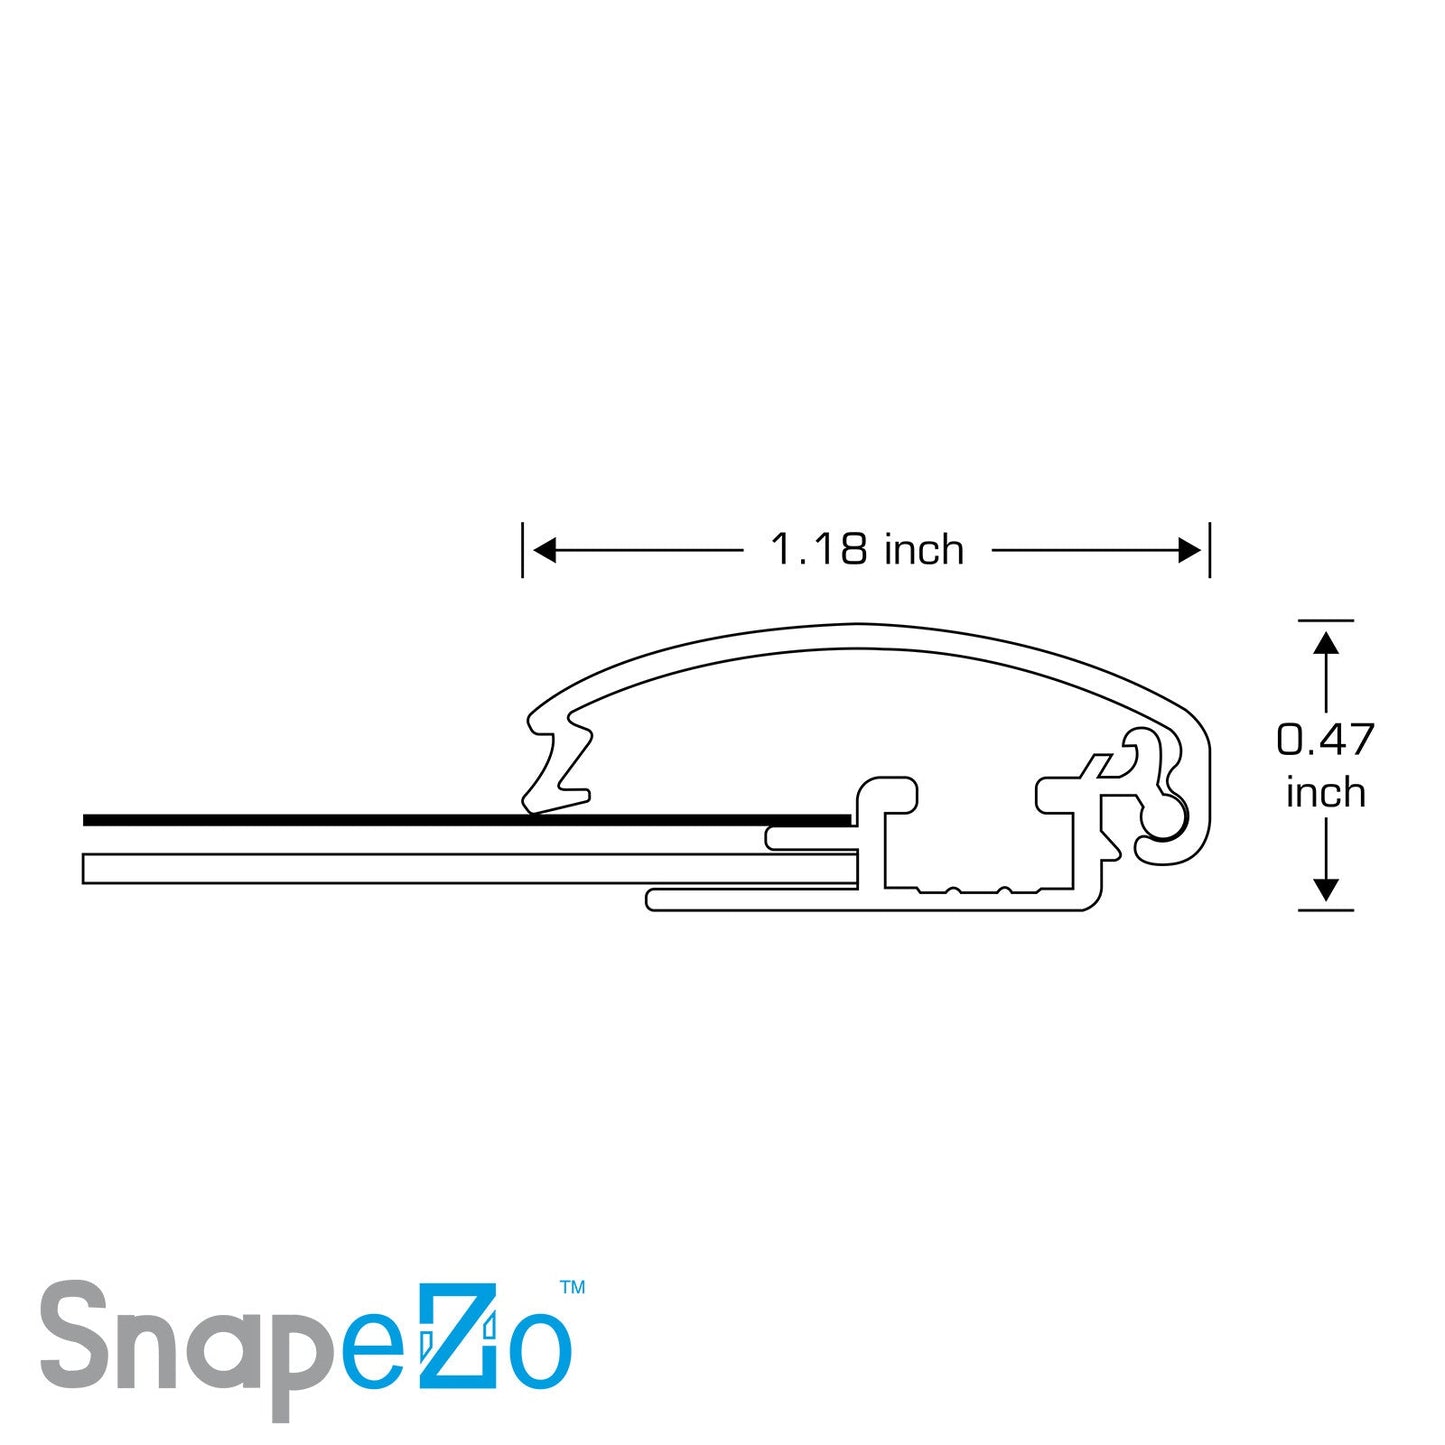 A1 Blue SnapeZo® Snap Frame - 1.2" Profile